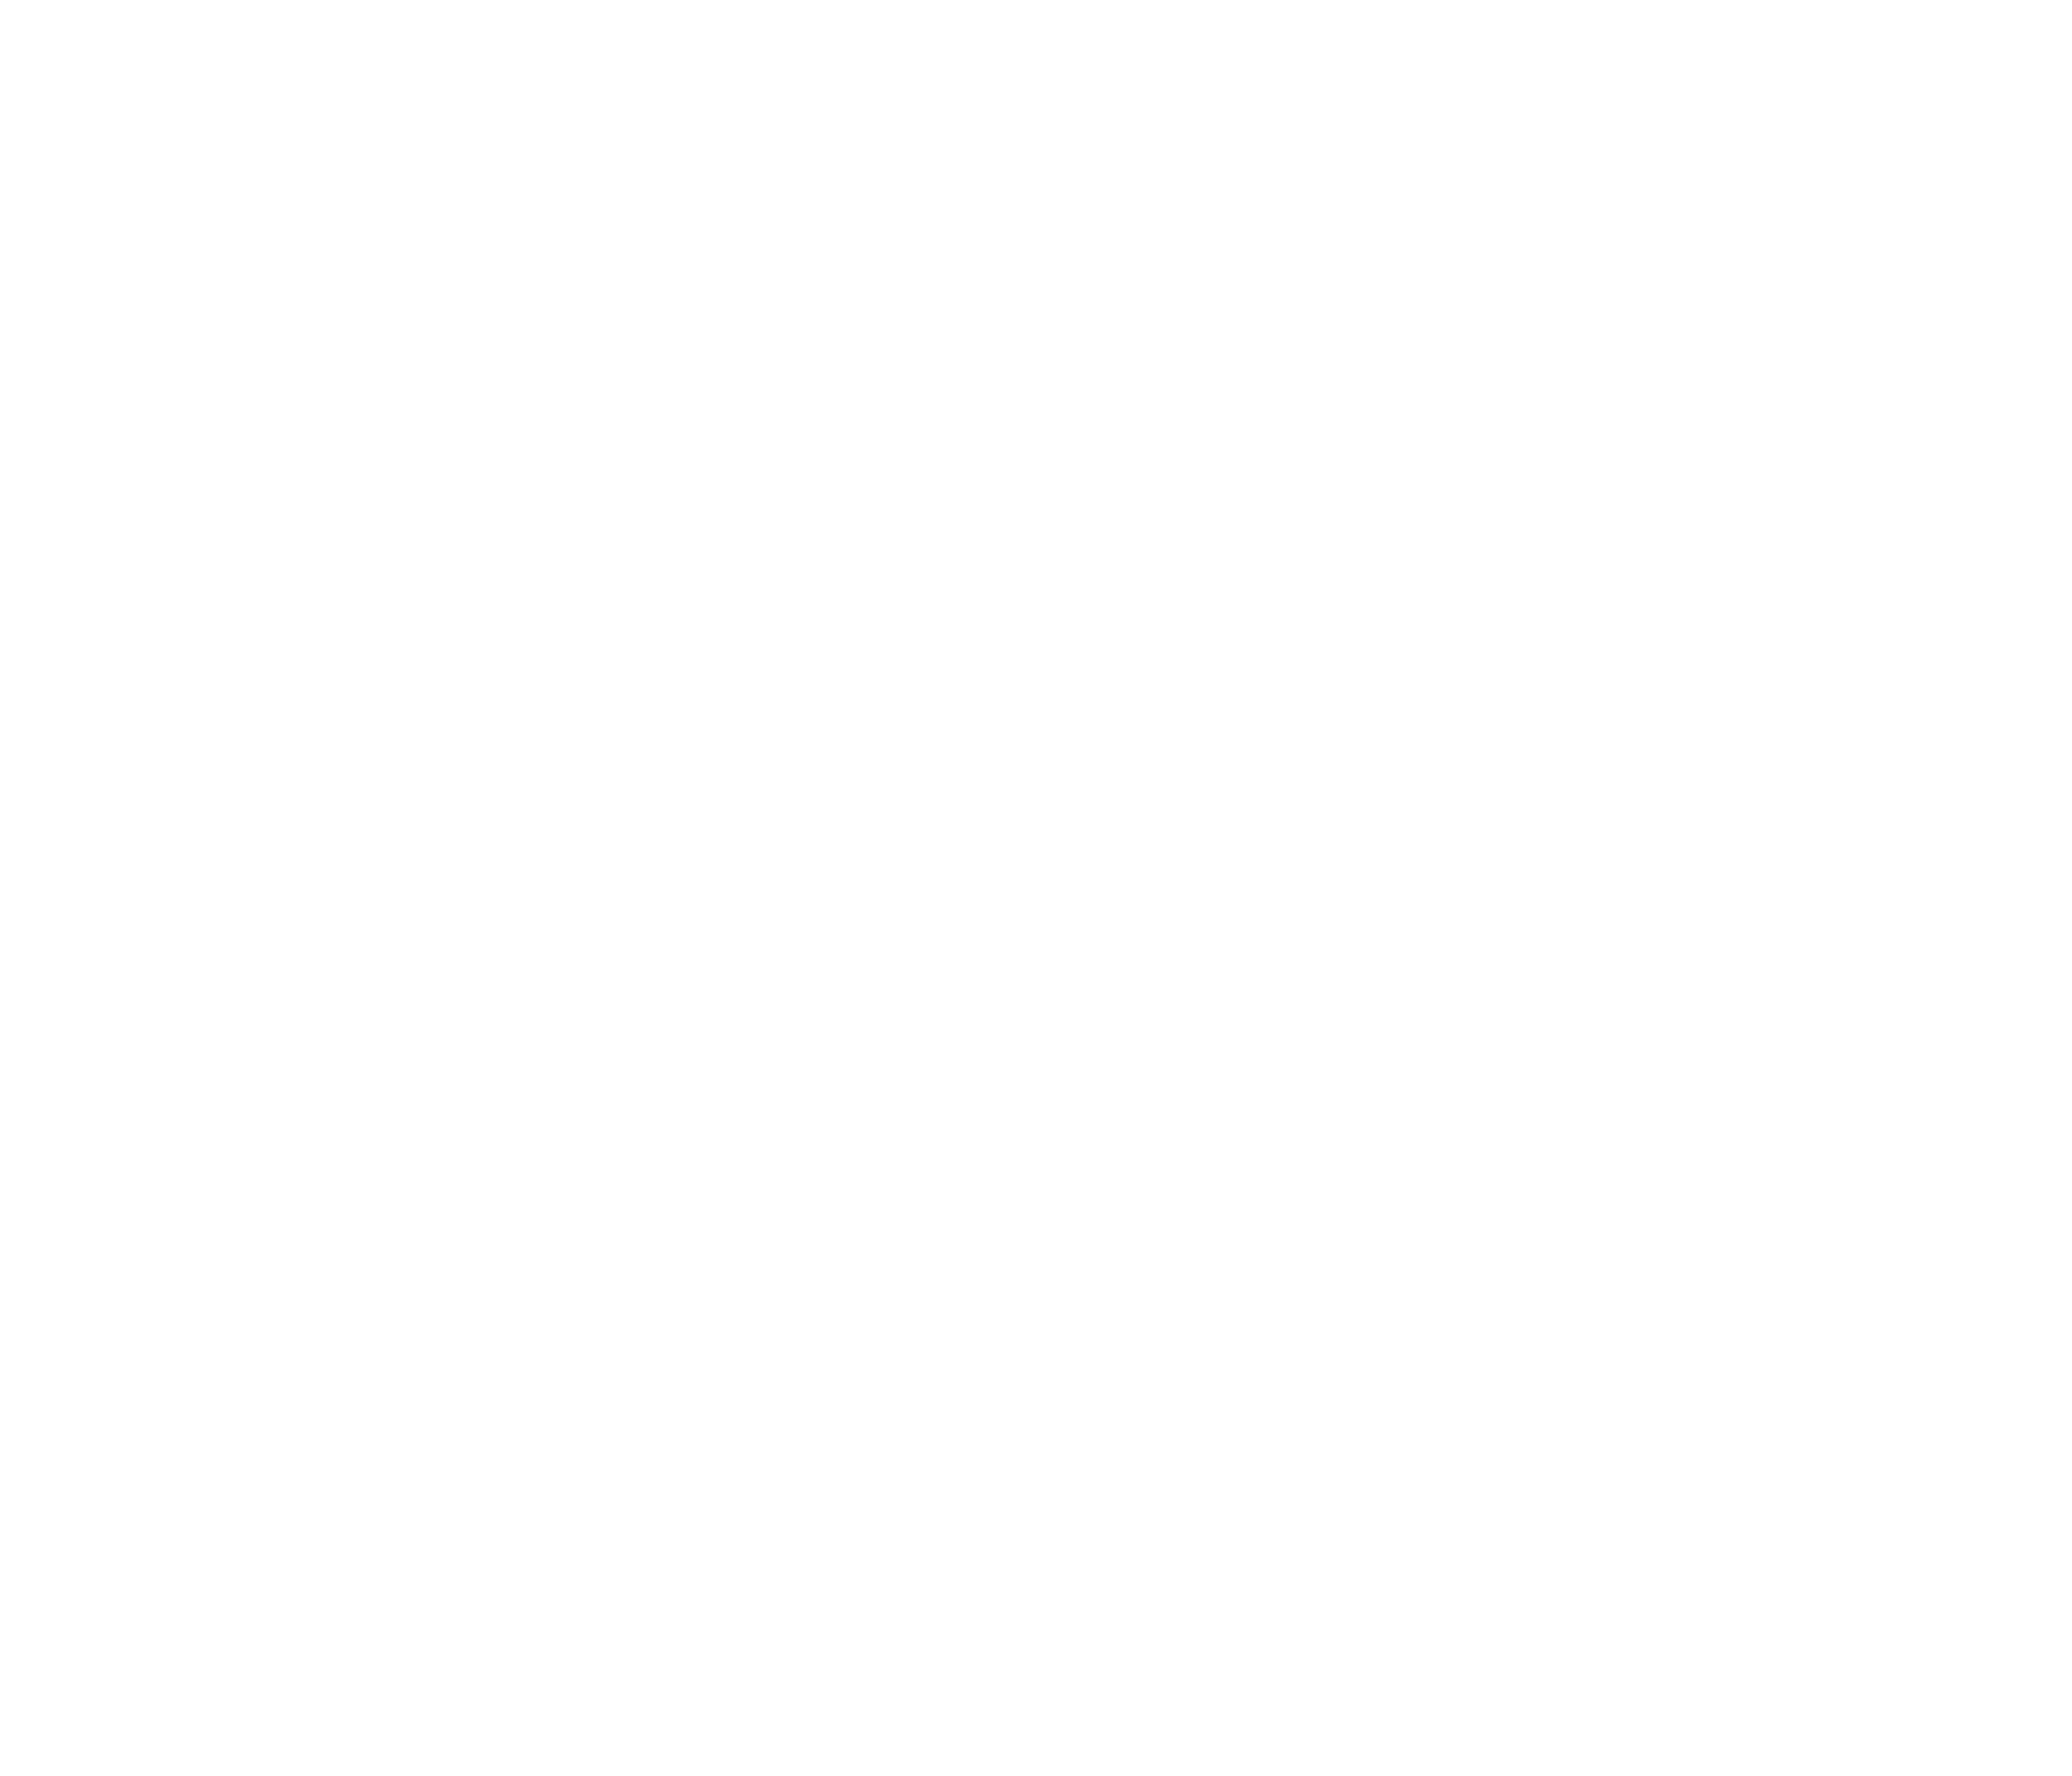 Lumy Digital